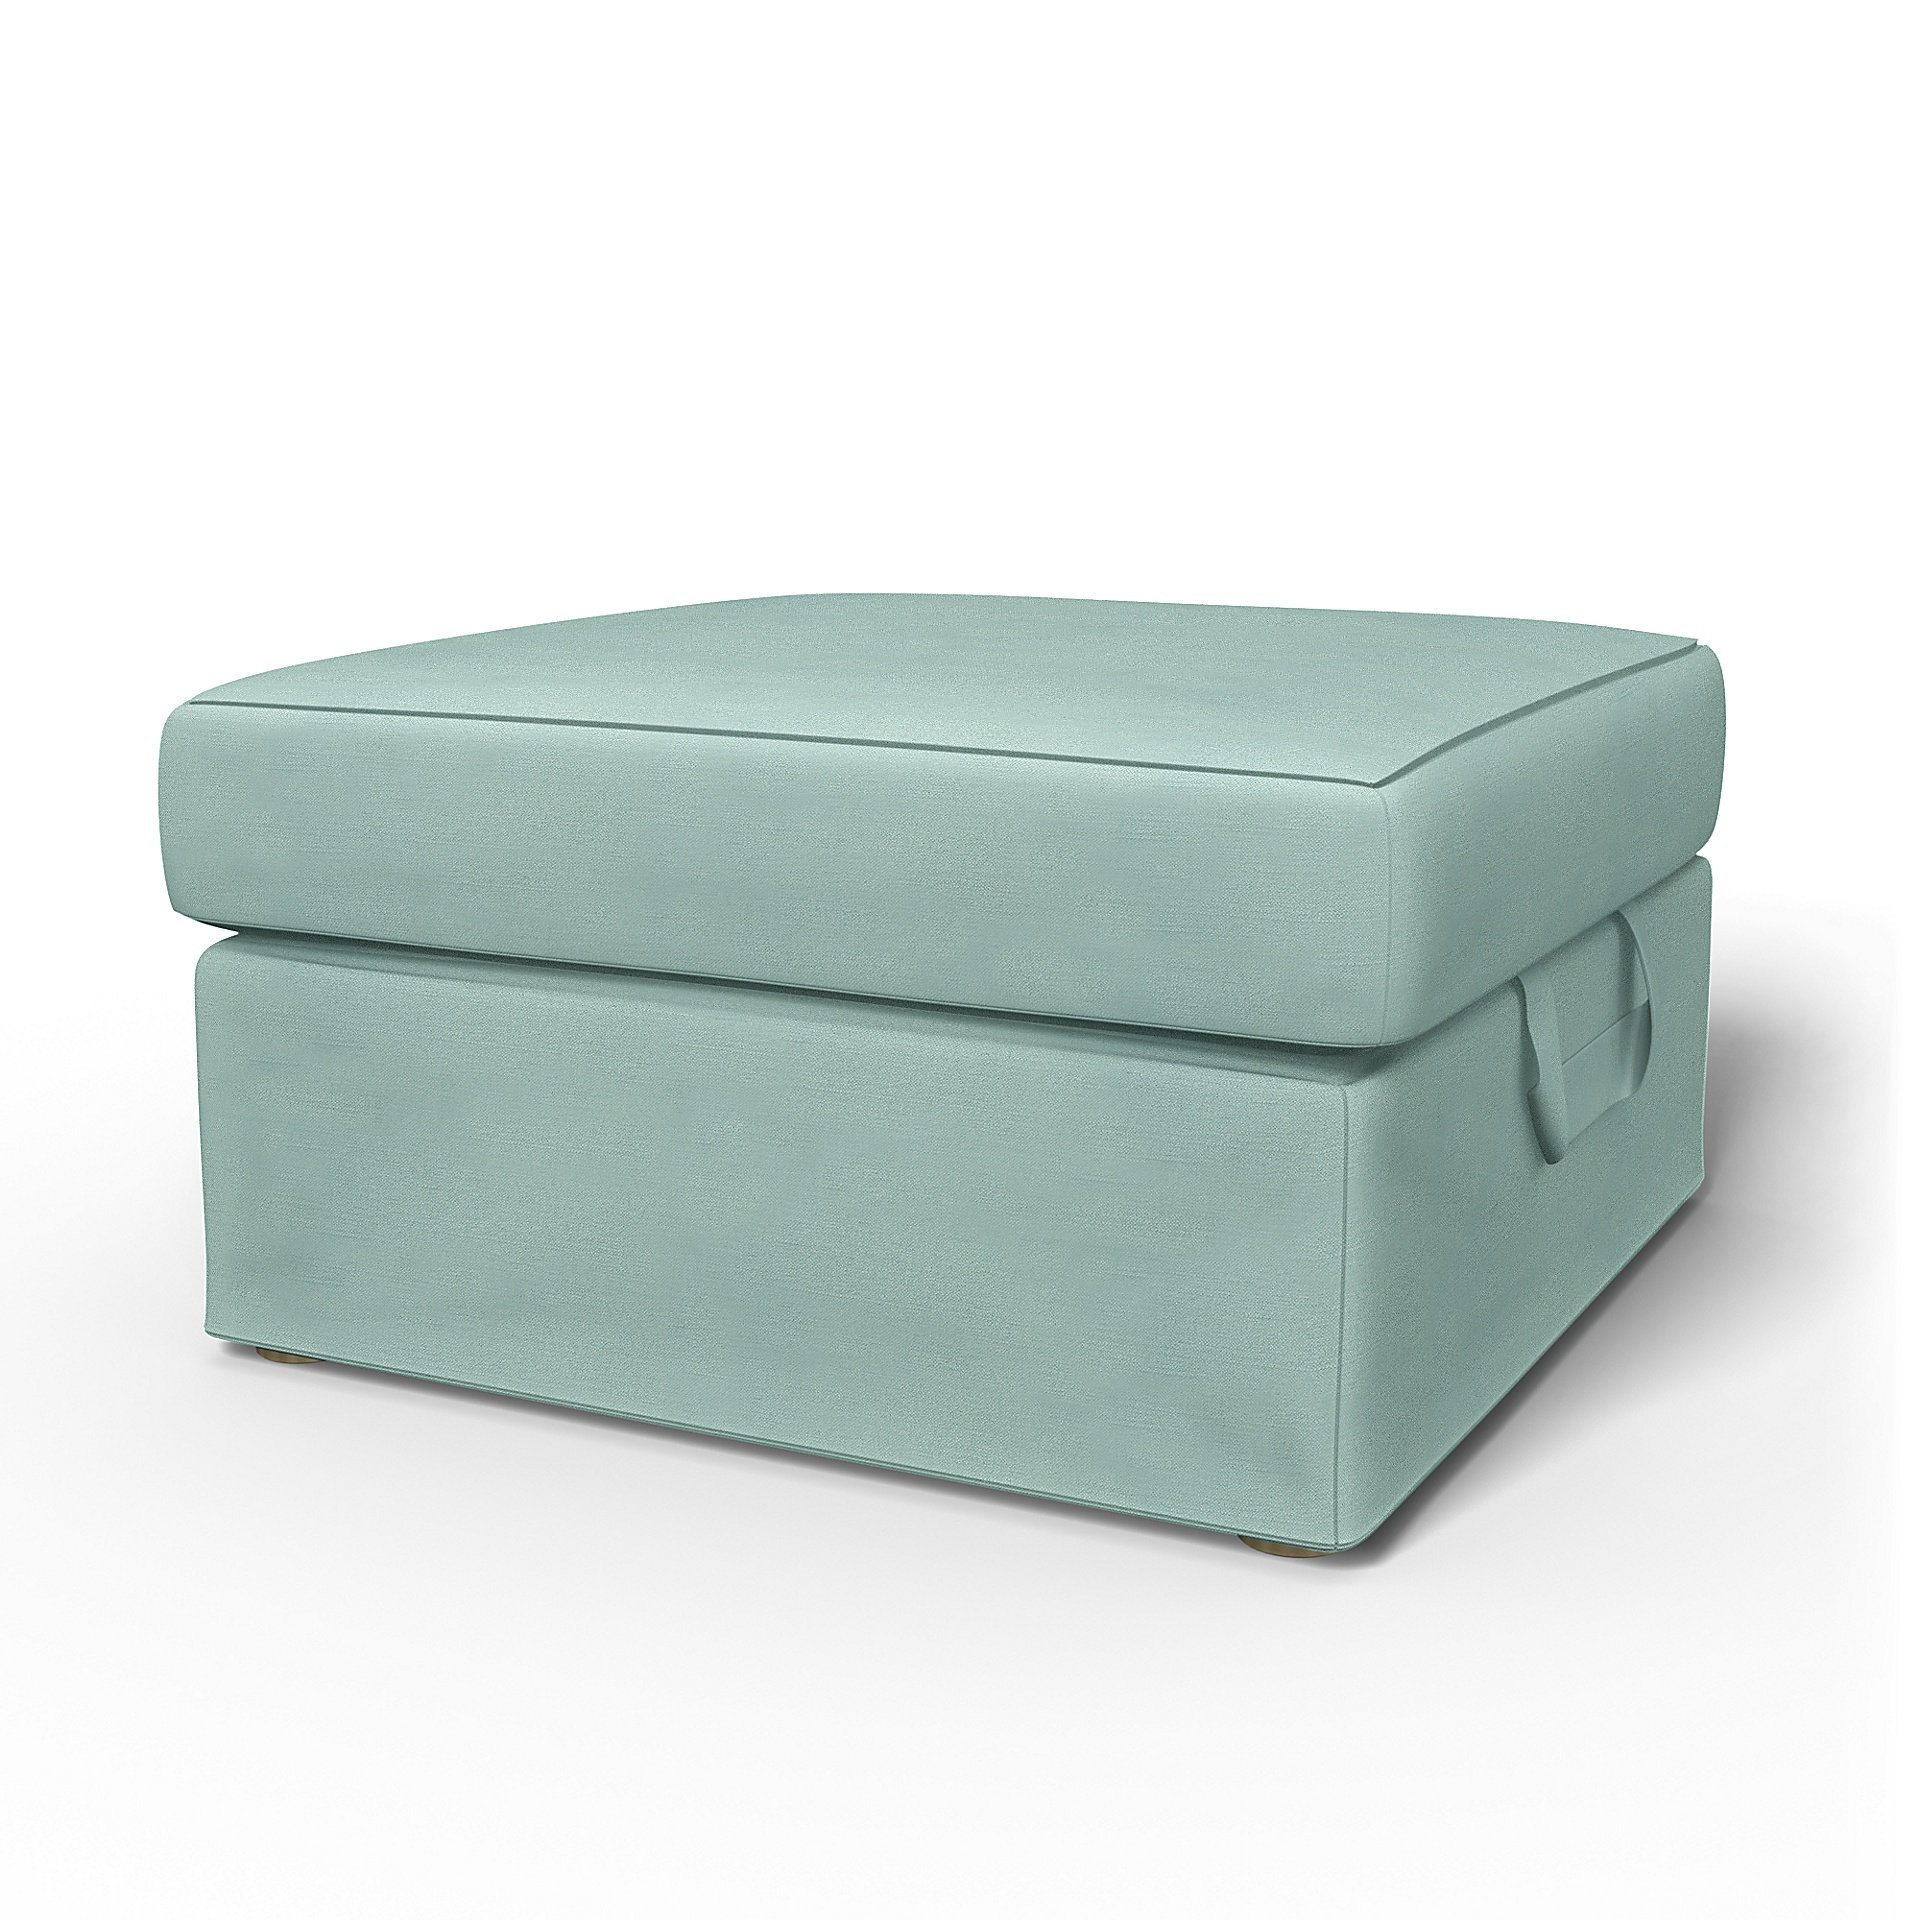 IKEA - Tomelilla Foto Footstool Cover, Mineral Blue, Linen - Bemz